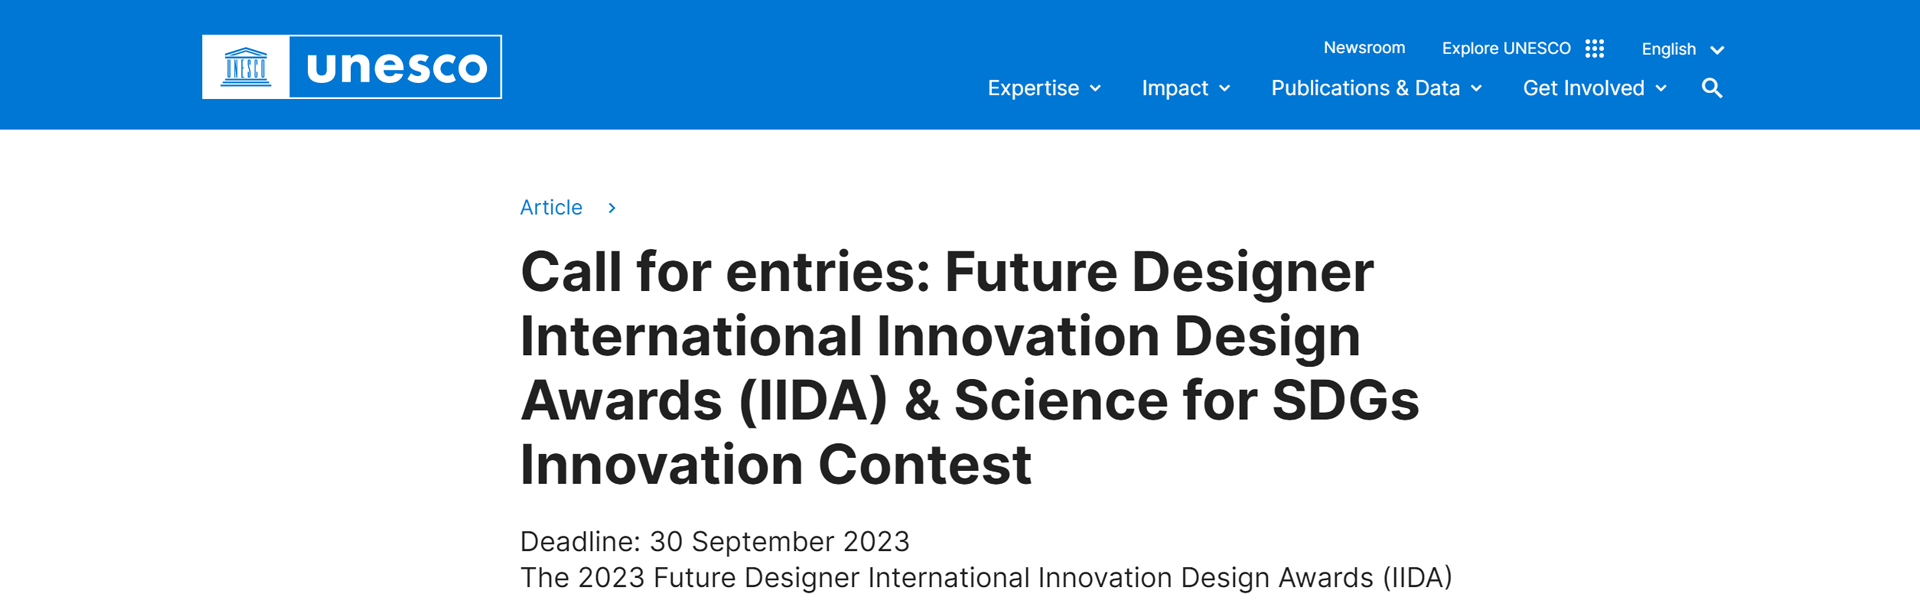 IIDA-International Innovation Design Aeards